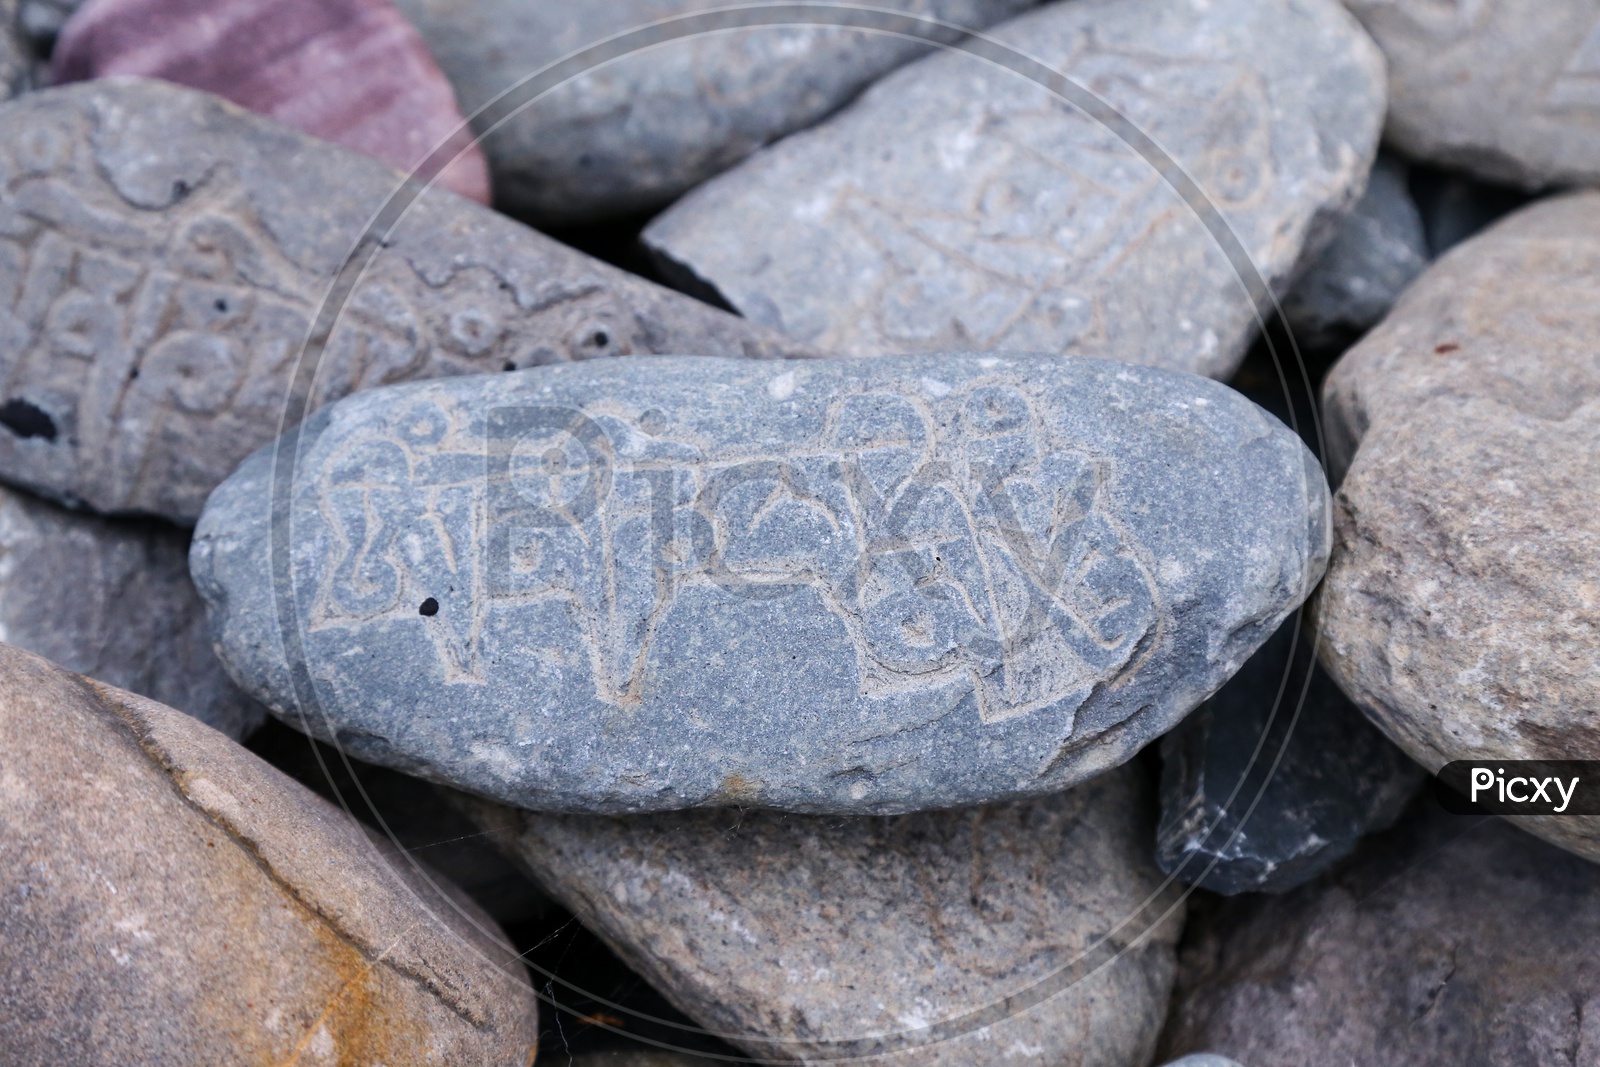 Stones with Sanskrit Script on them.